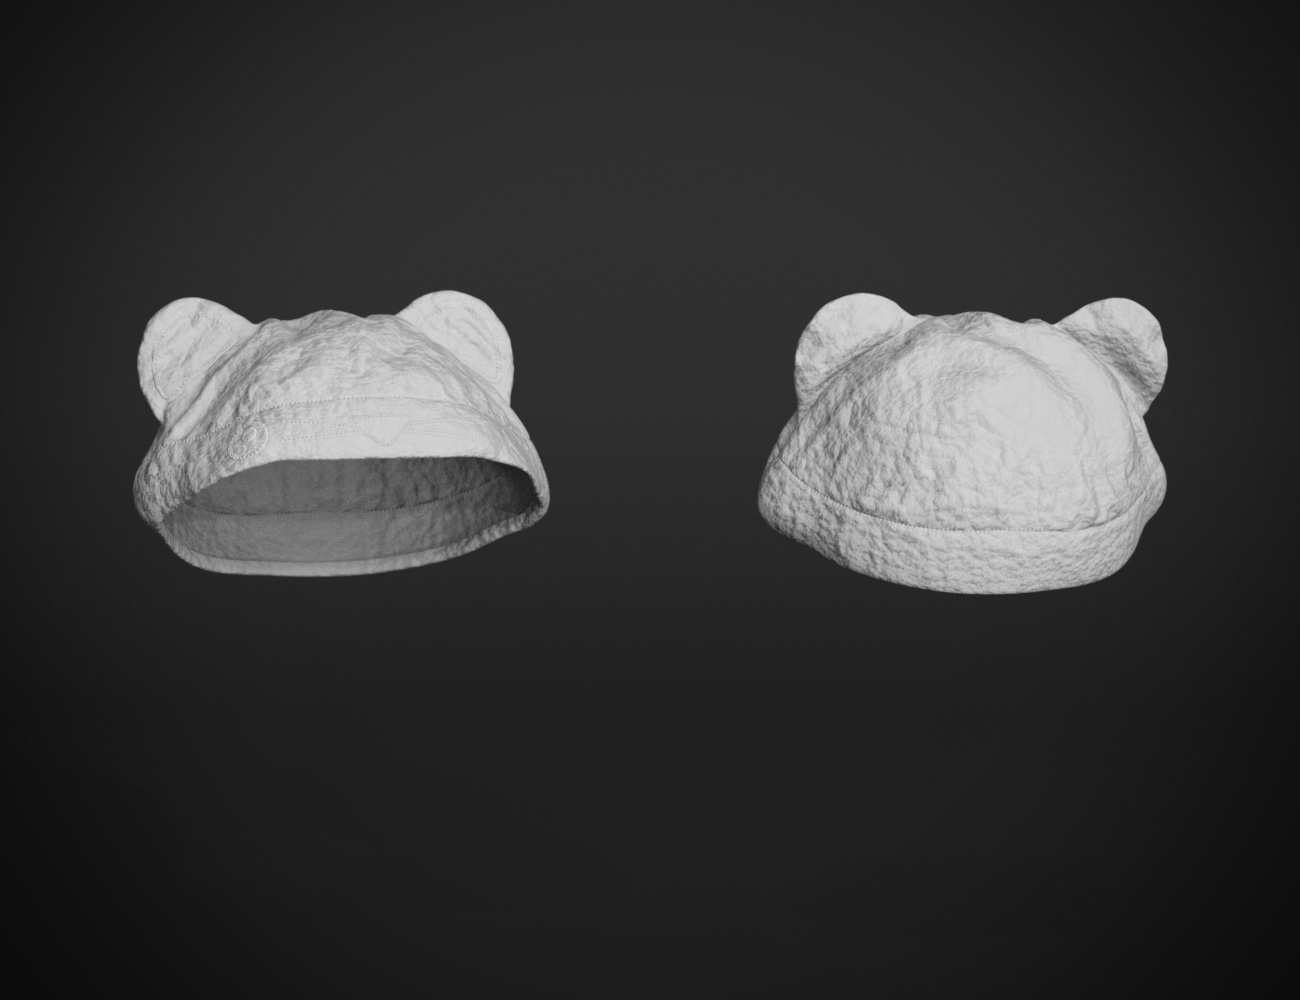 Mooki the Critter by: Hypertaf, 3D Models by Daz 3D